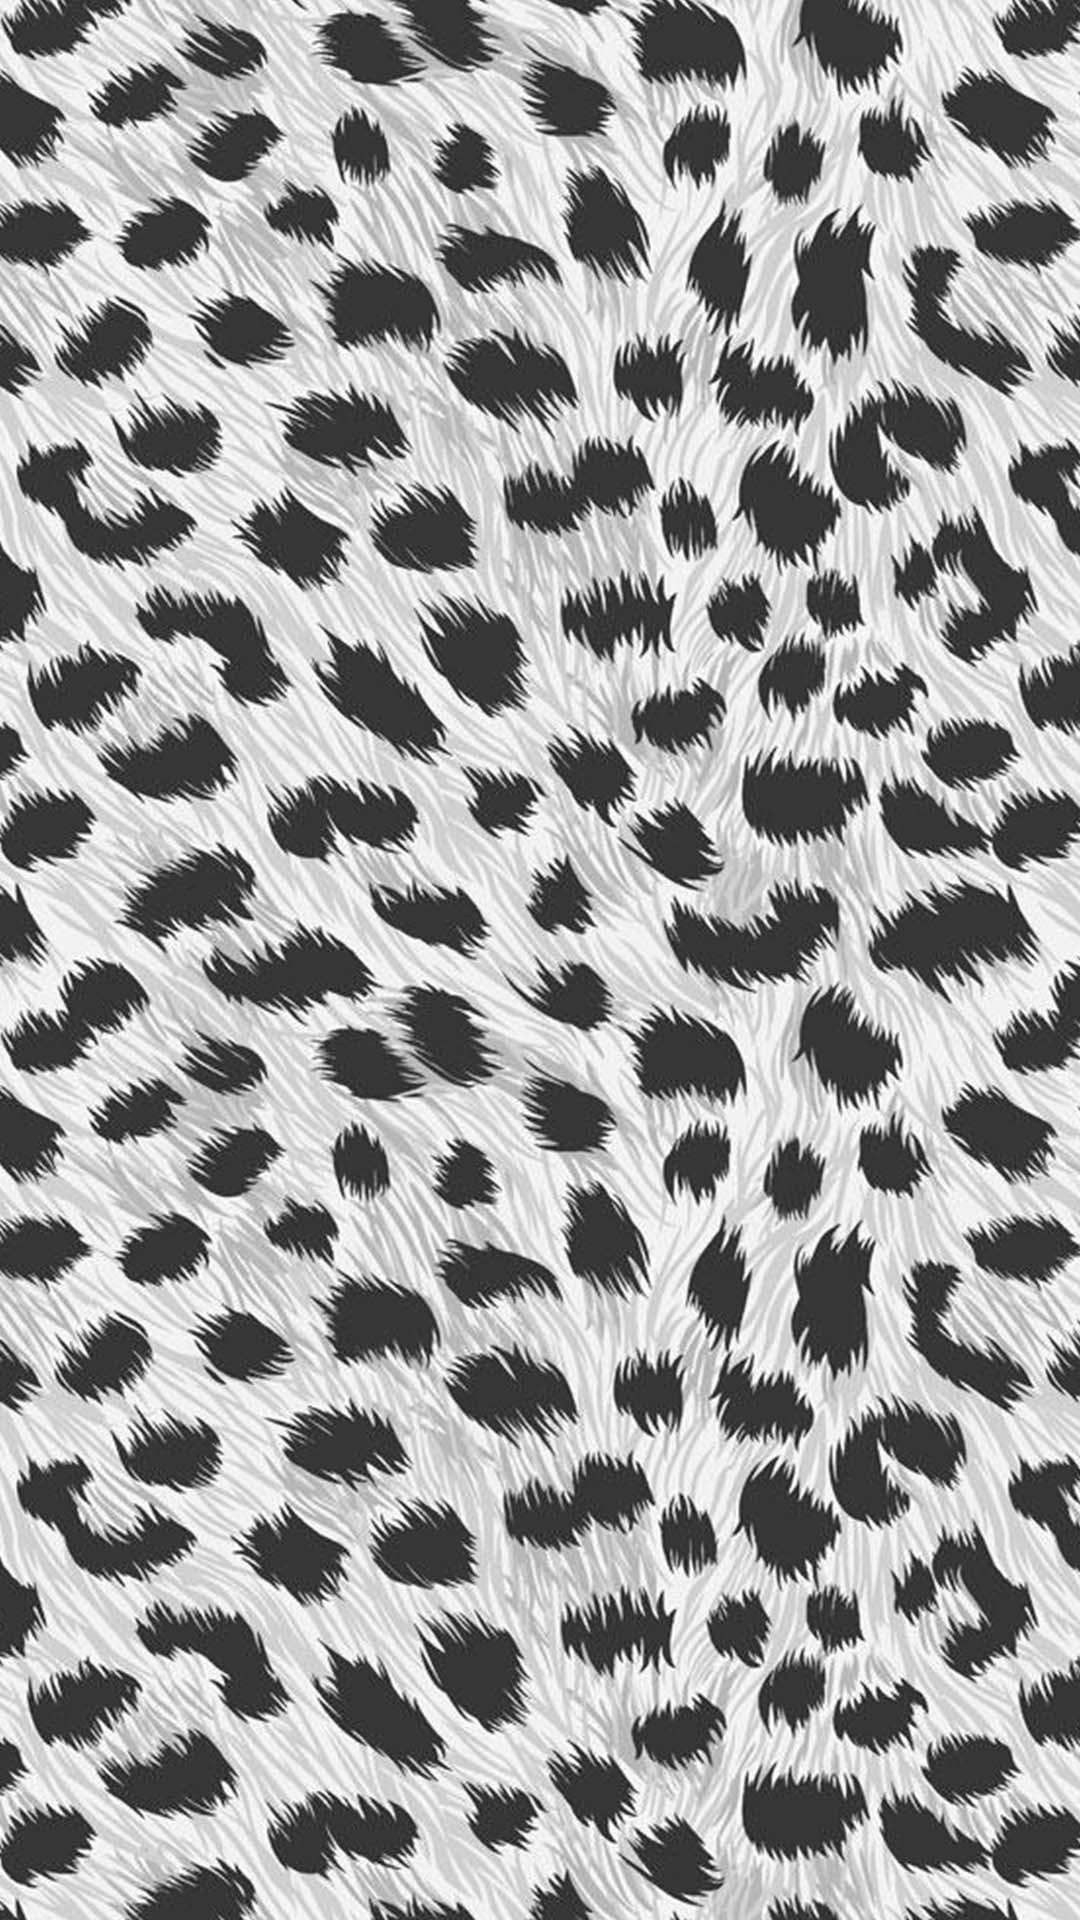 1080x1920 Pin by Samantha Keller on . unorganized | Leopard print wallpaper, Print wallpaper, Animal print wallpaper